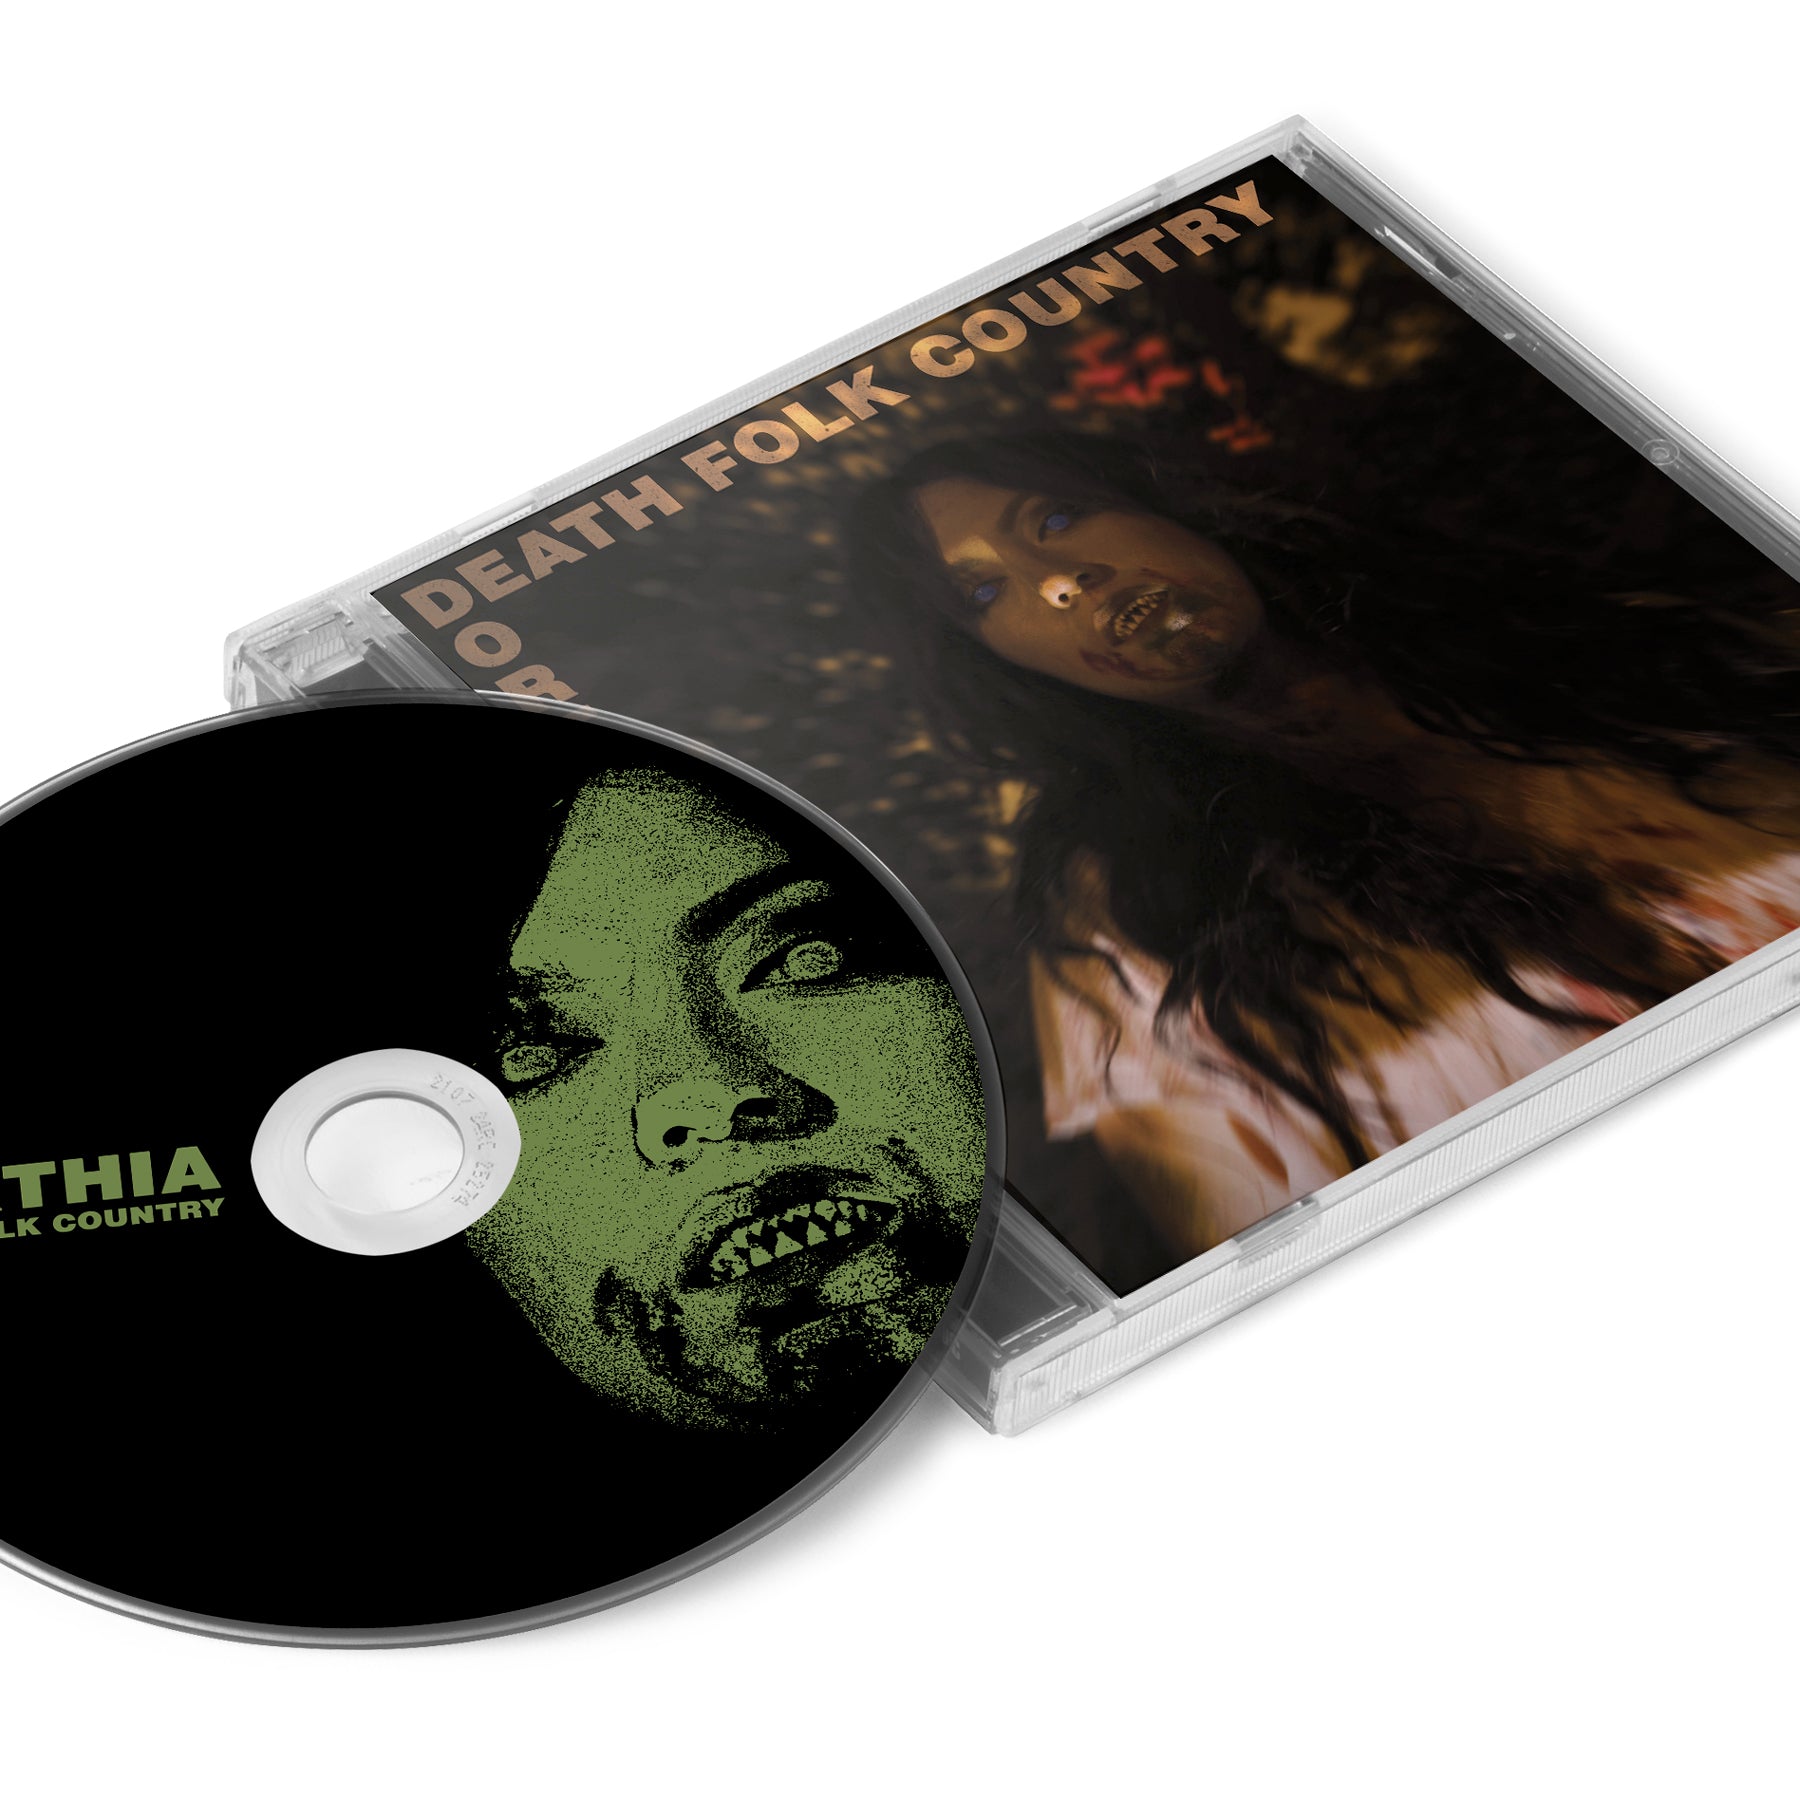 Frivillig Rede med tiden Dorthia Cottrell "Death Folk Country" CD – Relapse Records Official Store